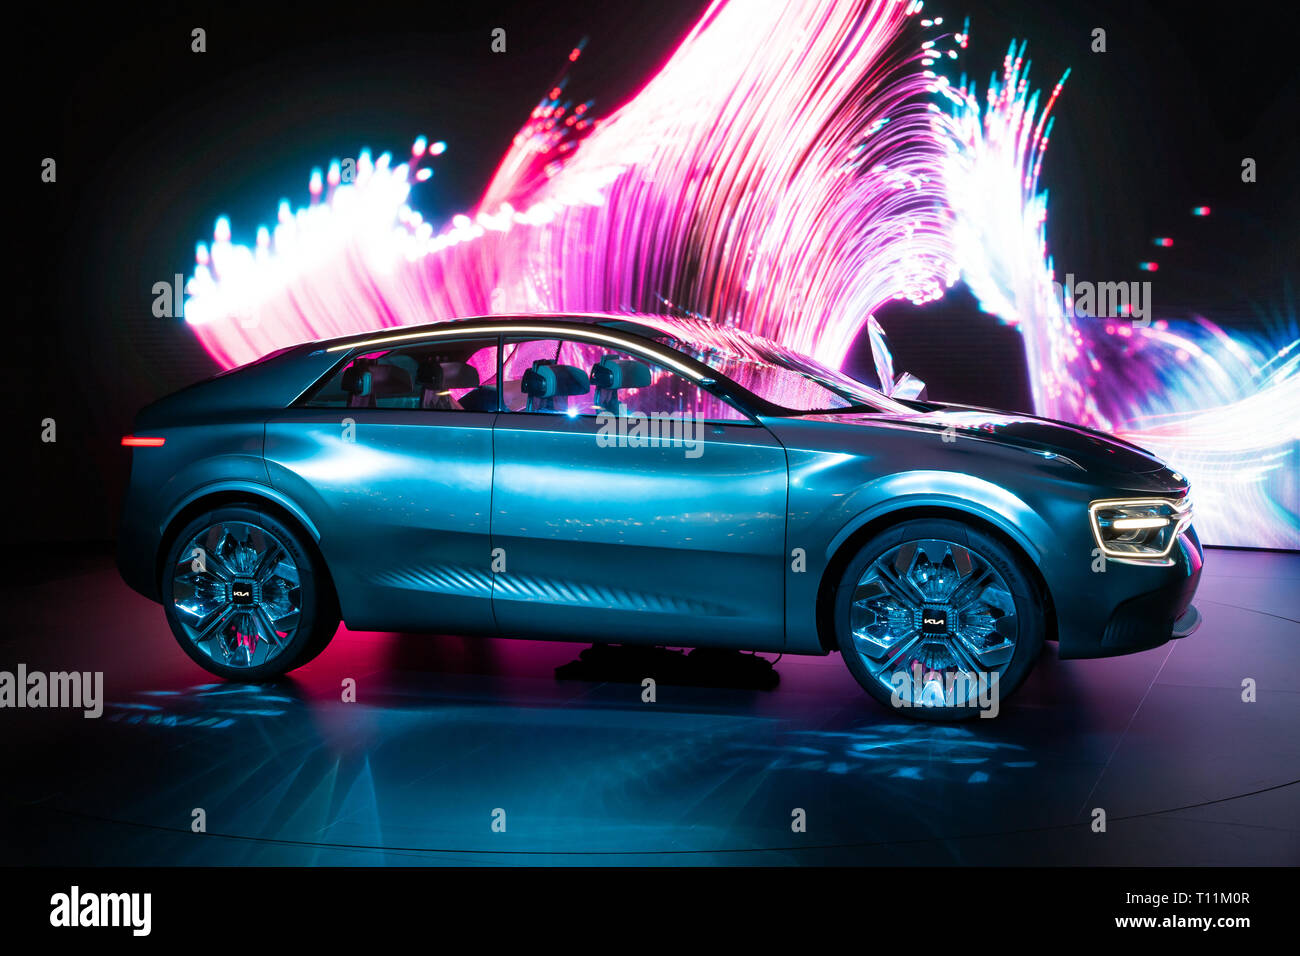 Genf, Schweiz - 5. MÄRZ 2019: Kia Concept Car reveiled auf dem 89. Internationalen Automobil-Salon Genf Stockfoto